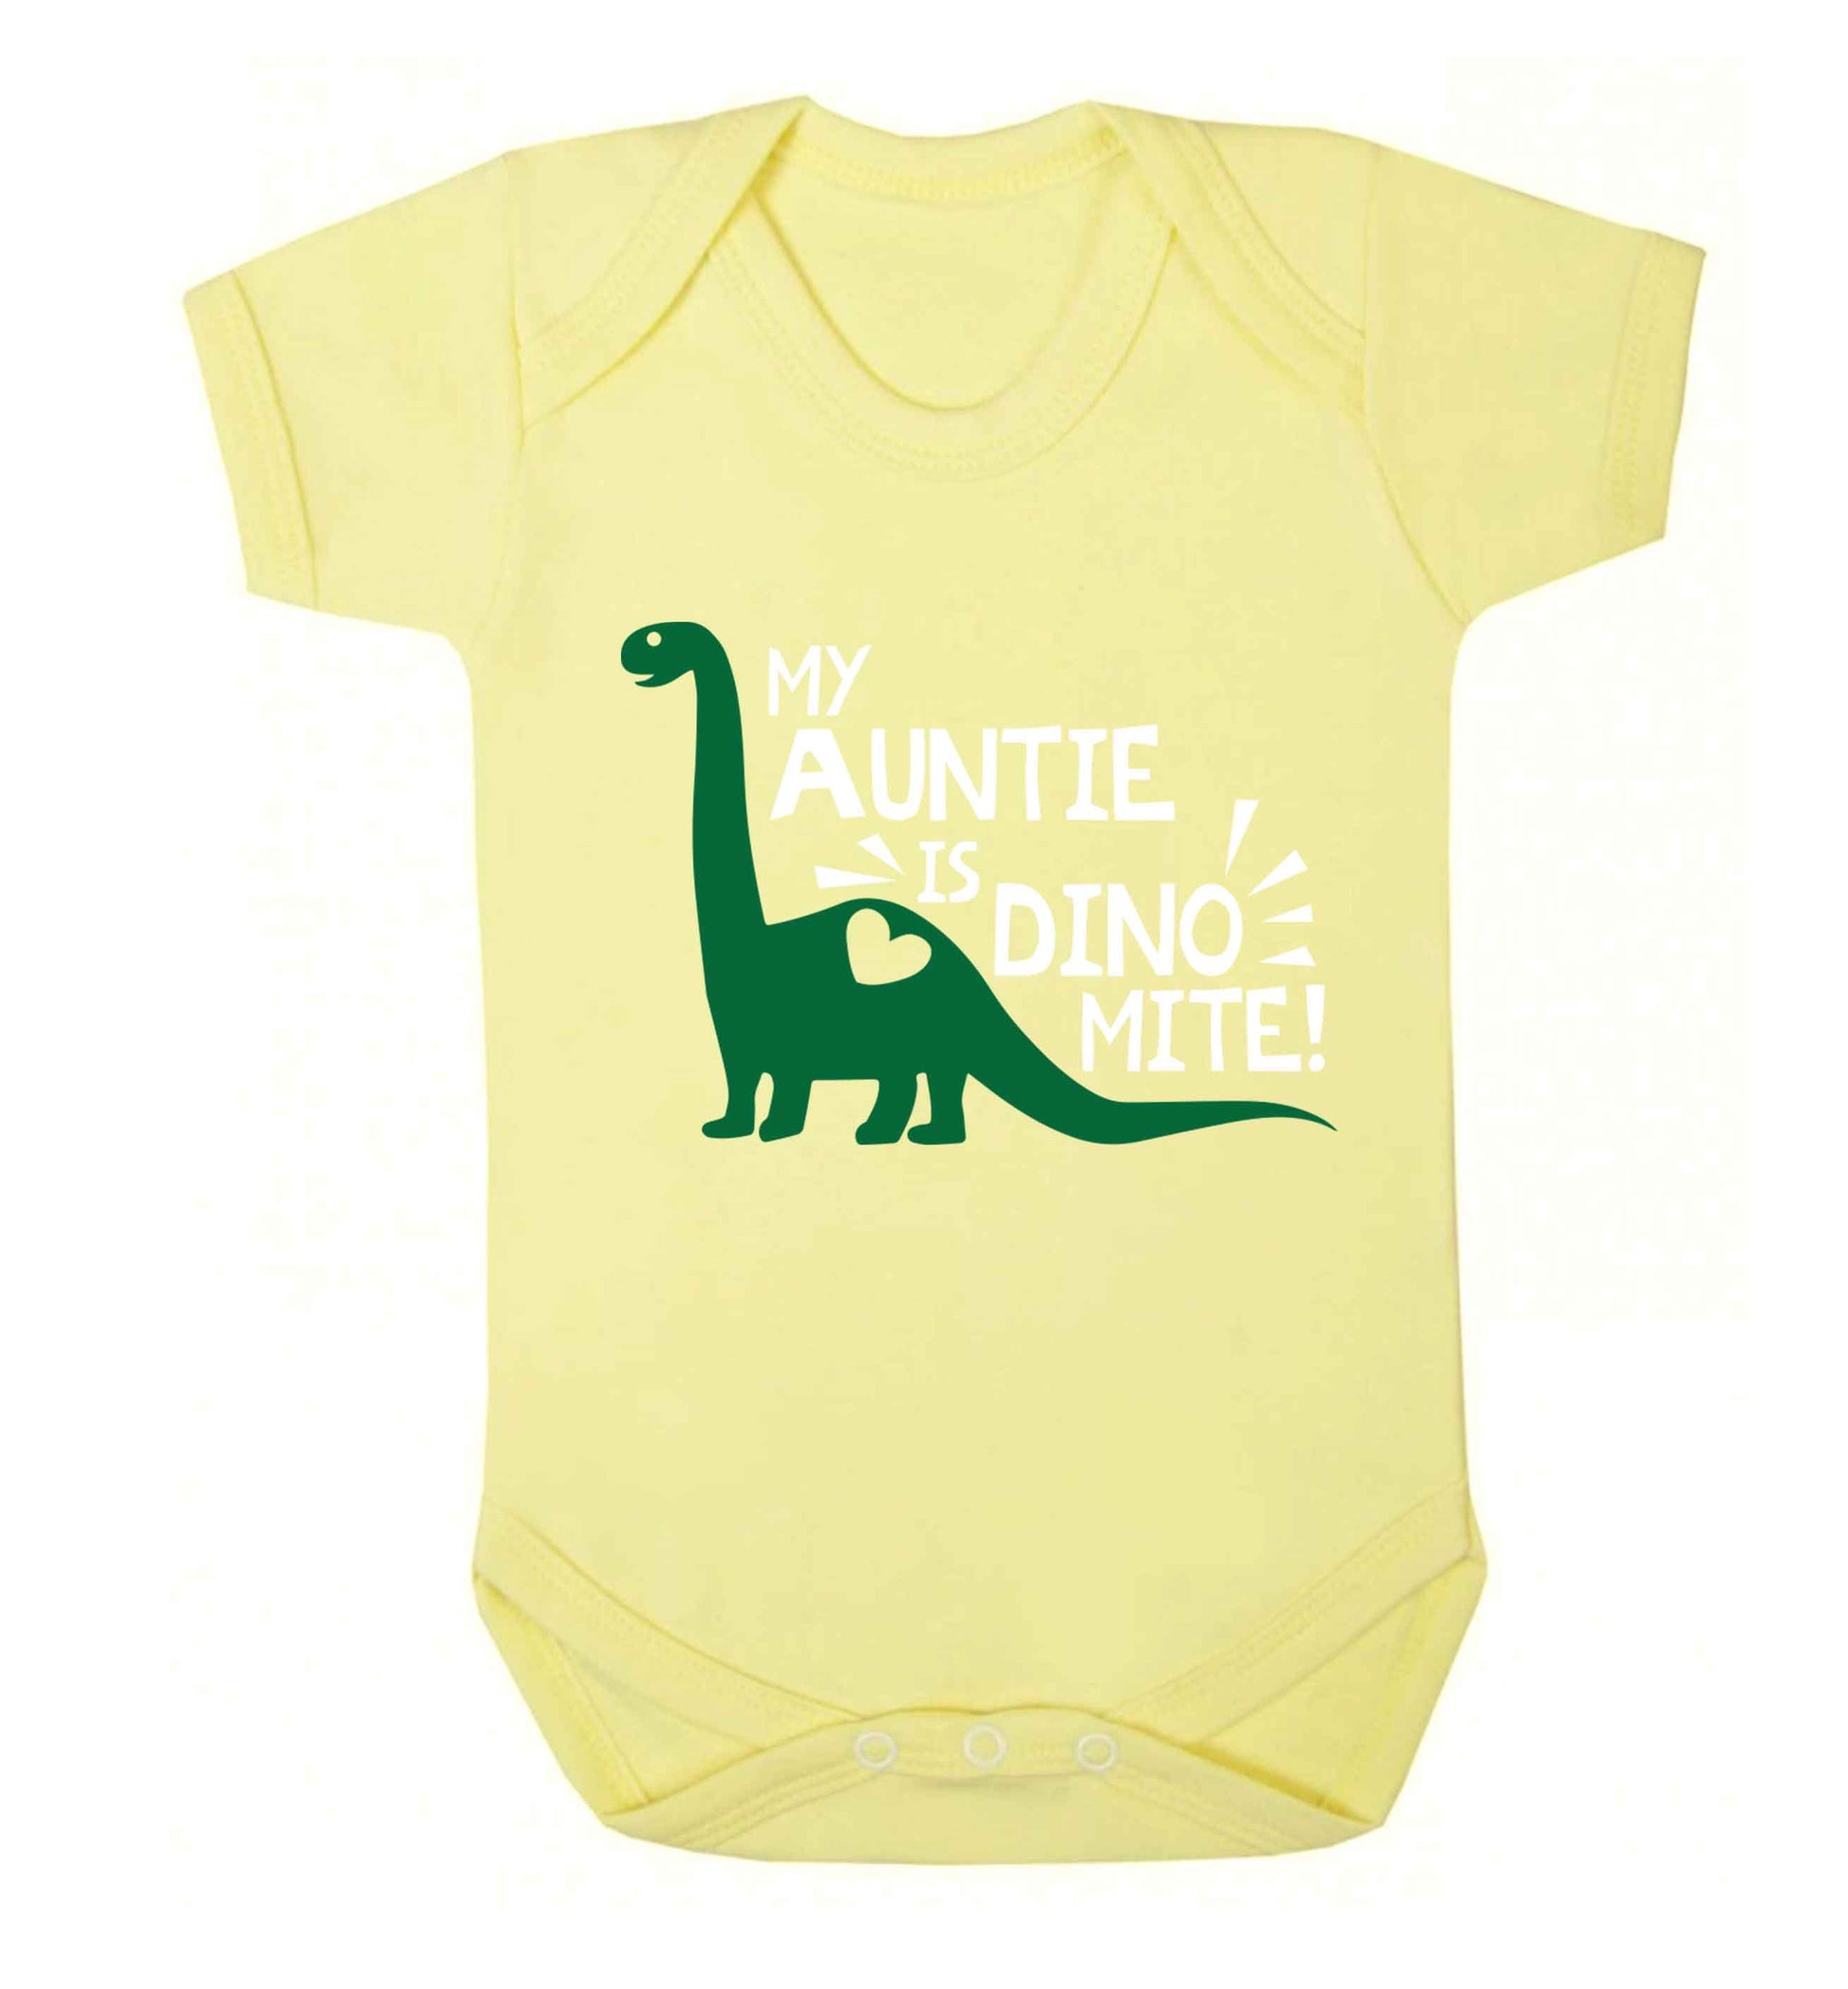 My auntie is dinomite! Baby Vest pale yellow 18-24 months